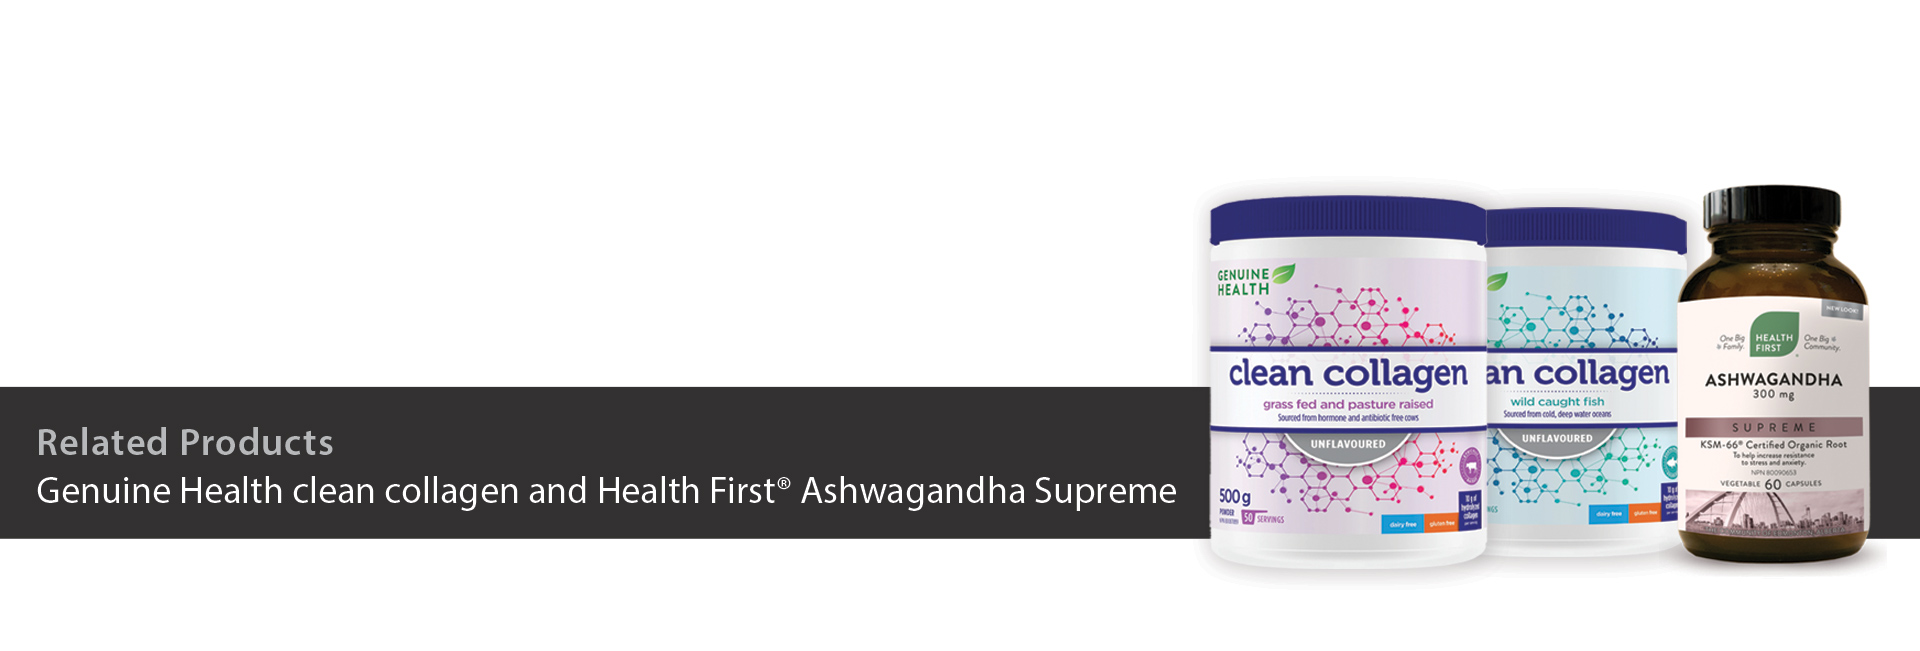 Genuine Health clean collagen and Health First Ashwagandha Supreme